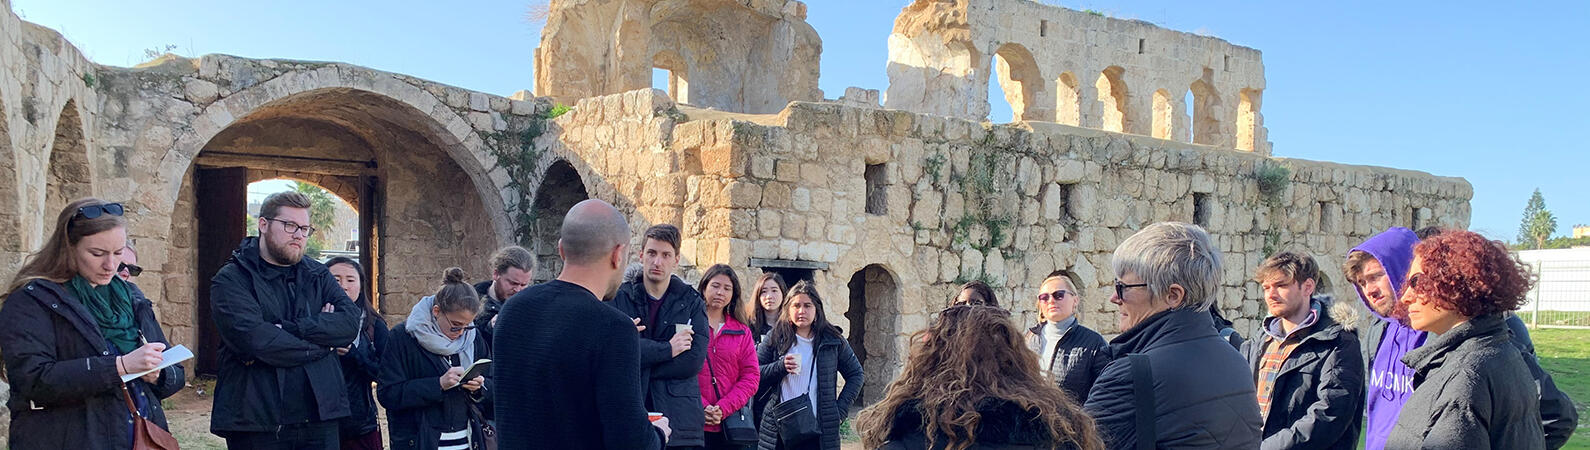 RLP students, January 2019 study tour in Jurasalem